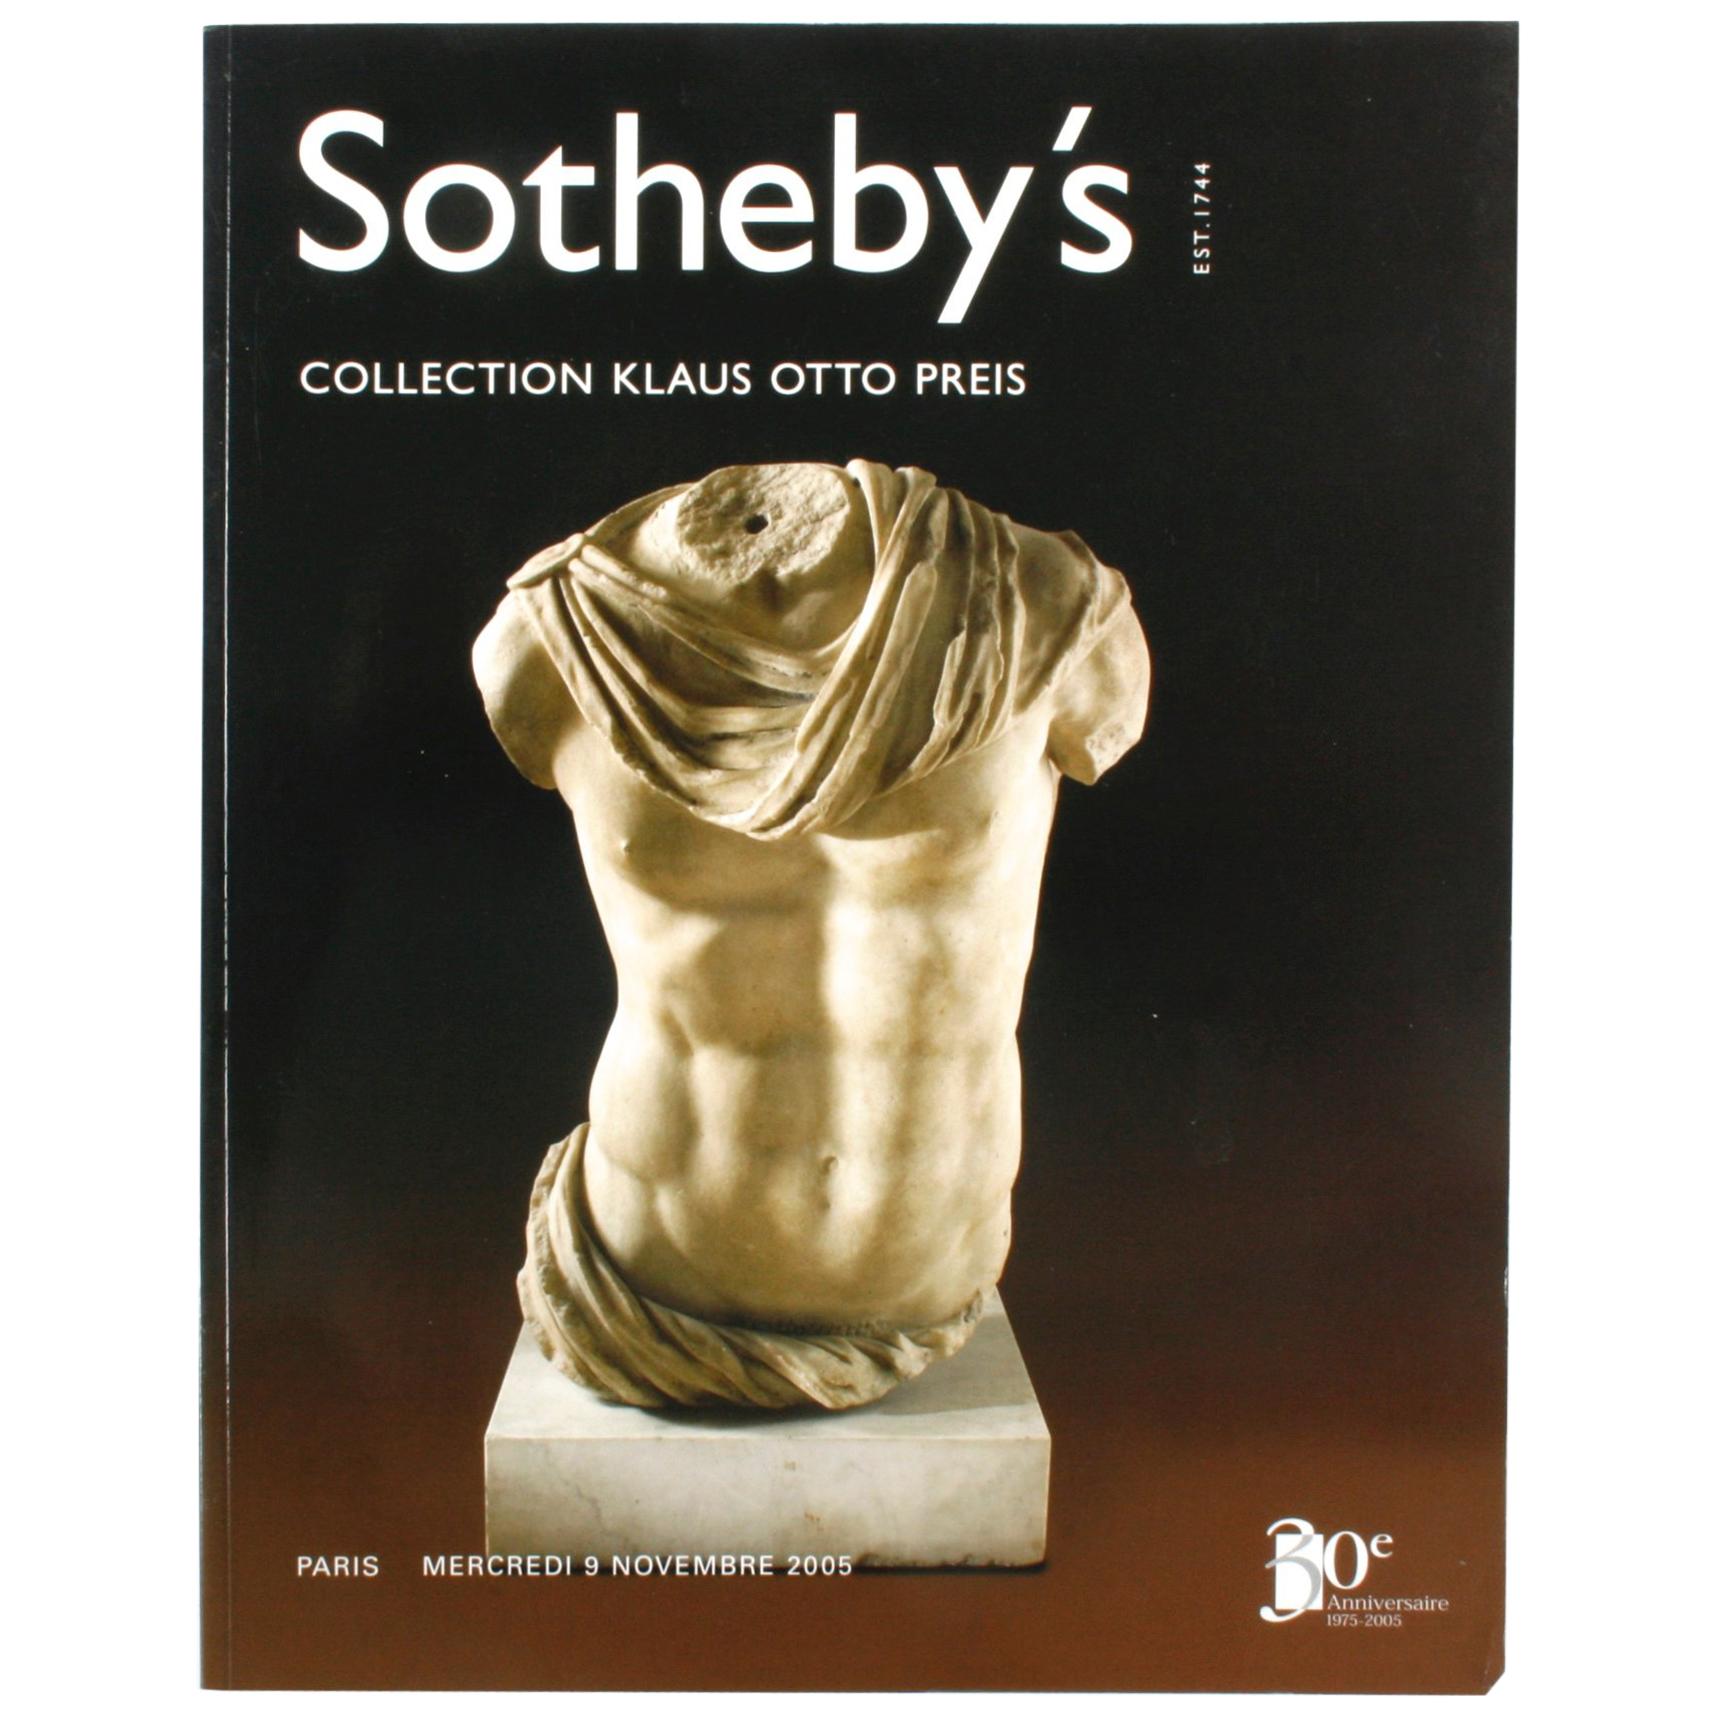 Sotheby's, Sammlung Klaus Otto Preis, Paris, 11/9/05